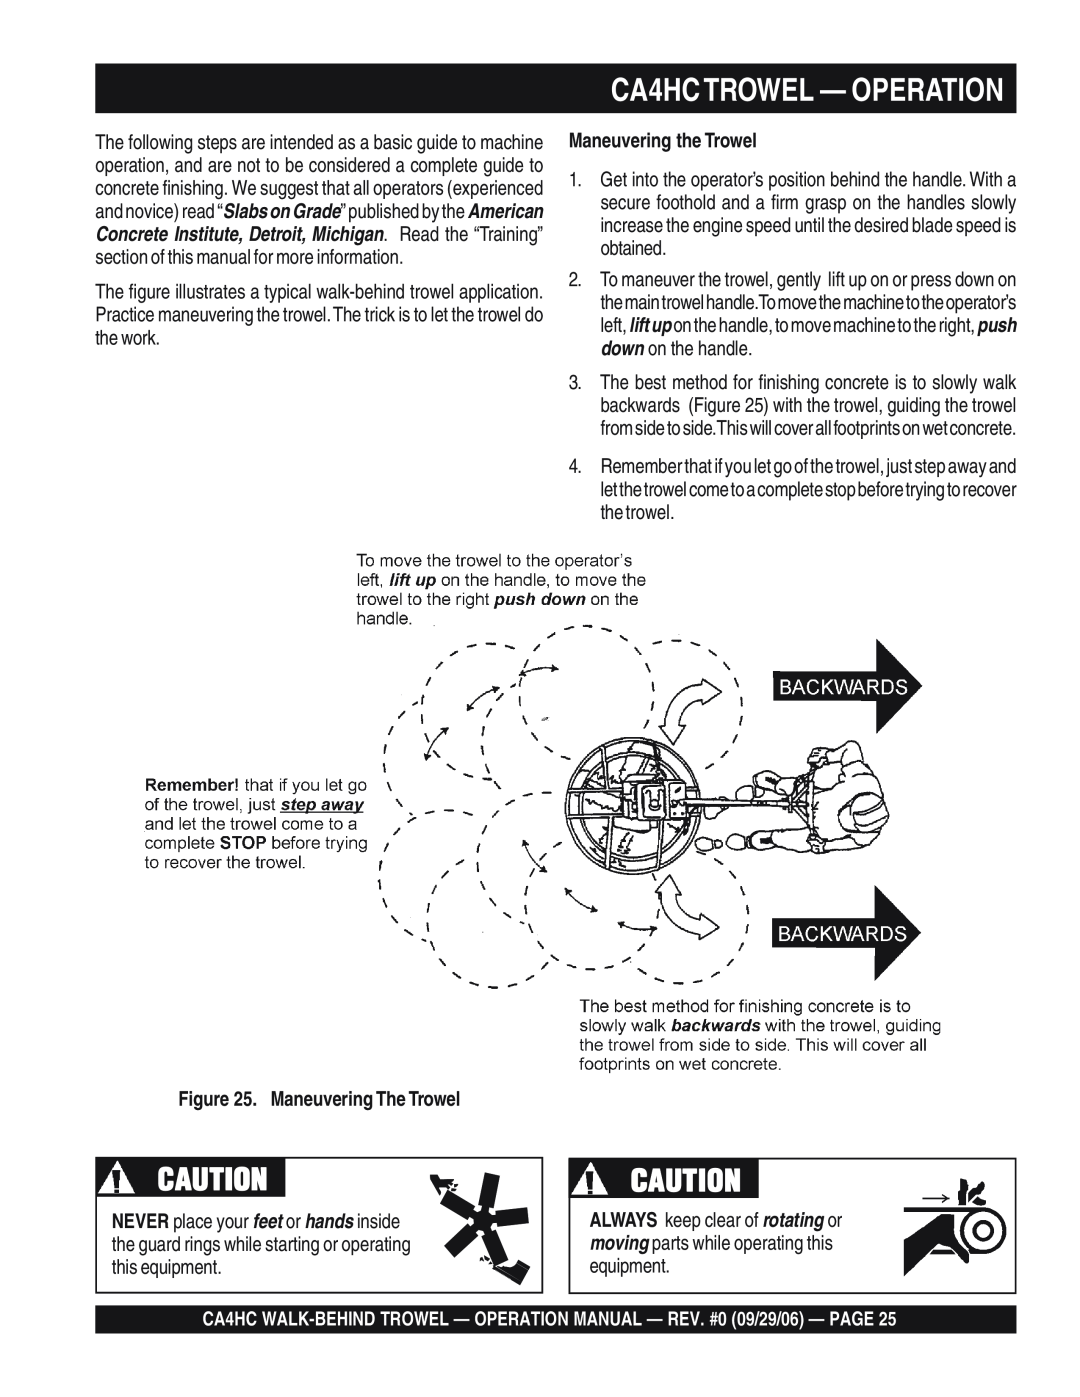 Multiquip operation manual CA4HCTROWEL — OPERATION, Maneuvering The Trowel, Maneuvering the Trowel 